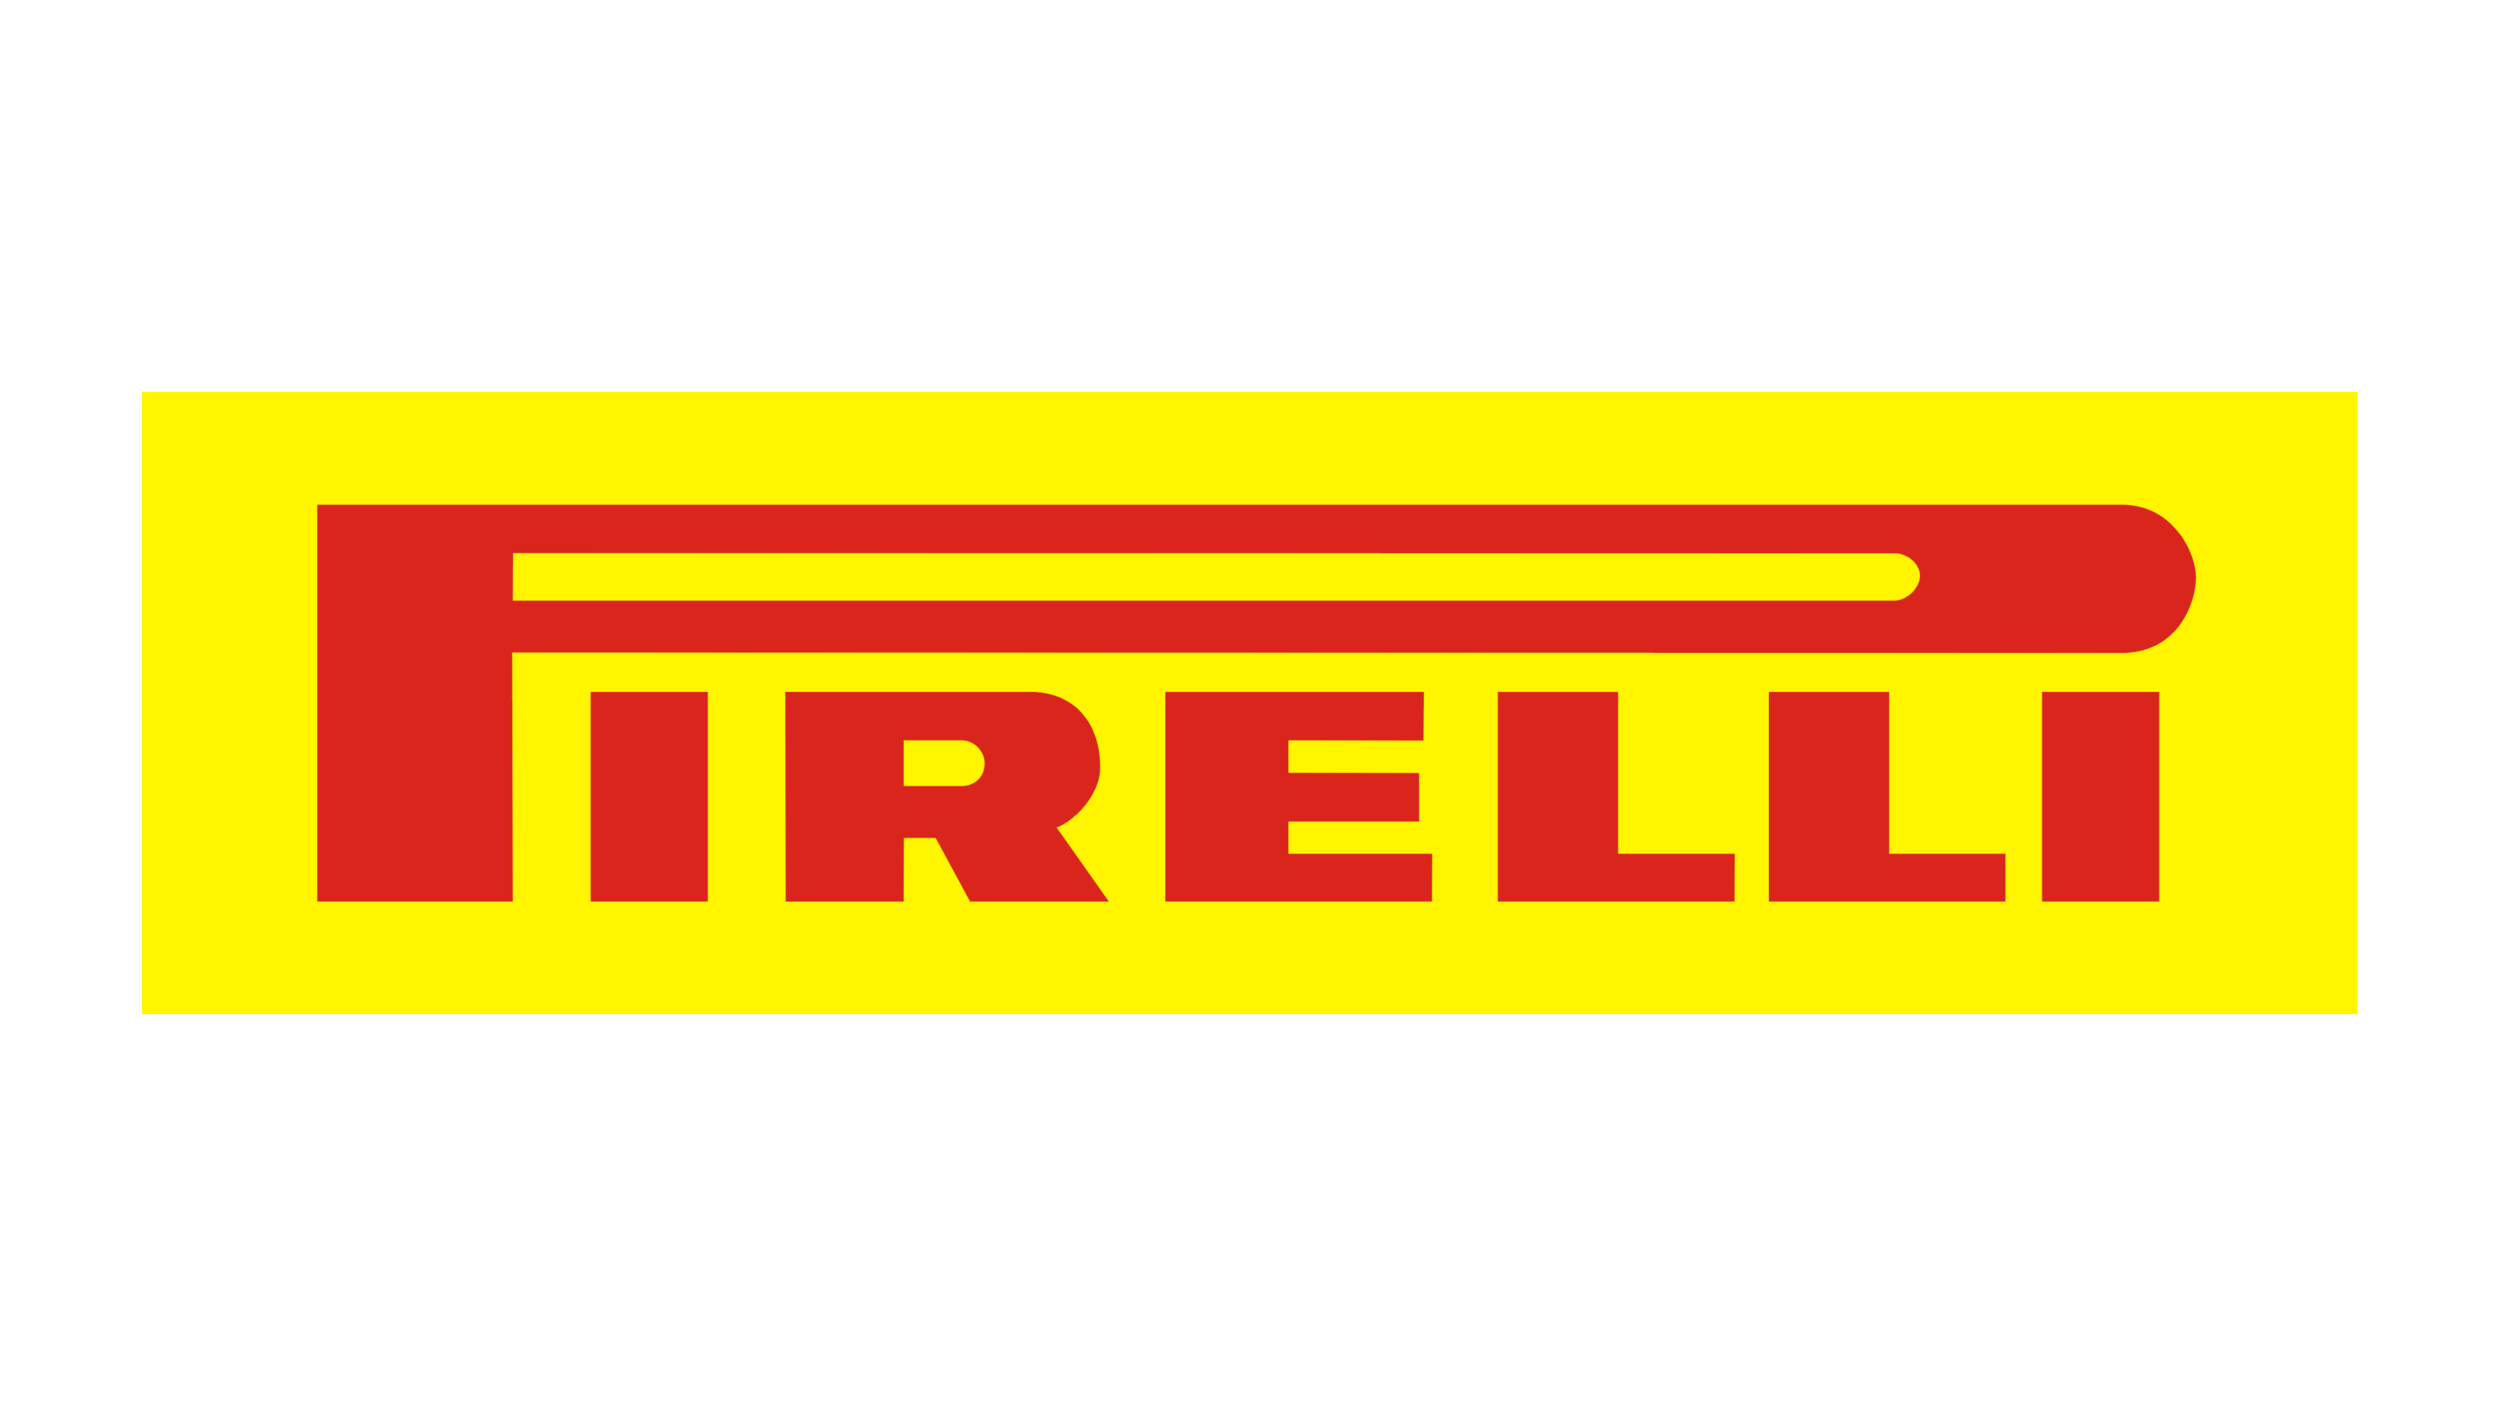 Pirelli-logo-3840x2160.png